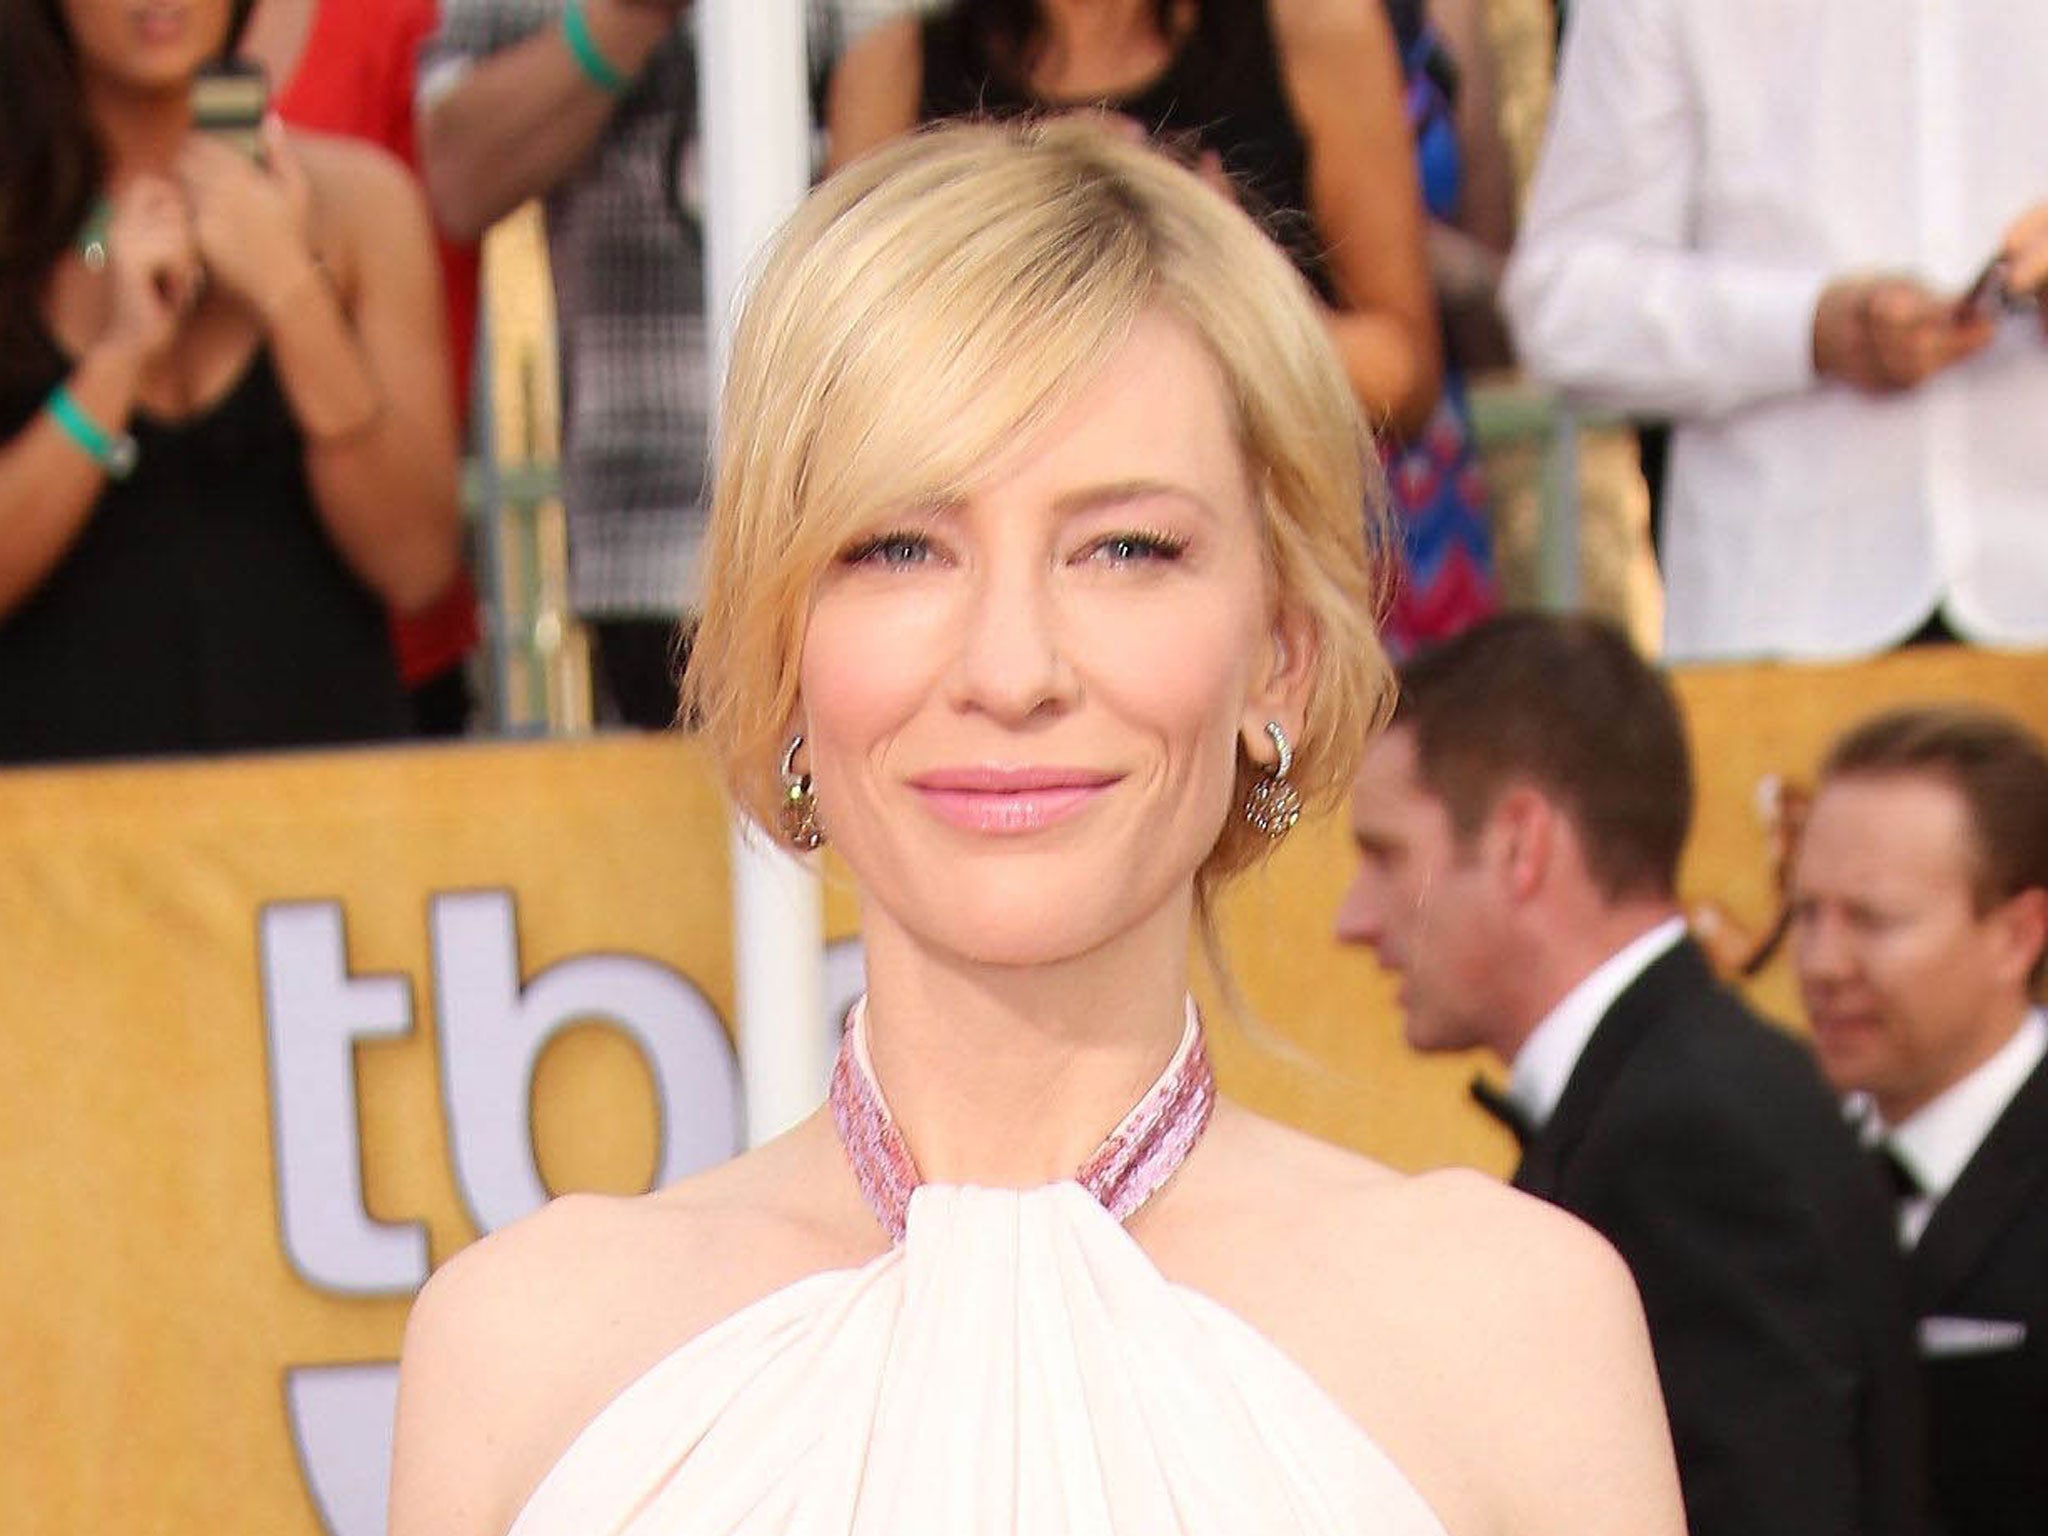 Cate Blanchett, actress